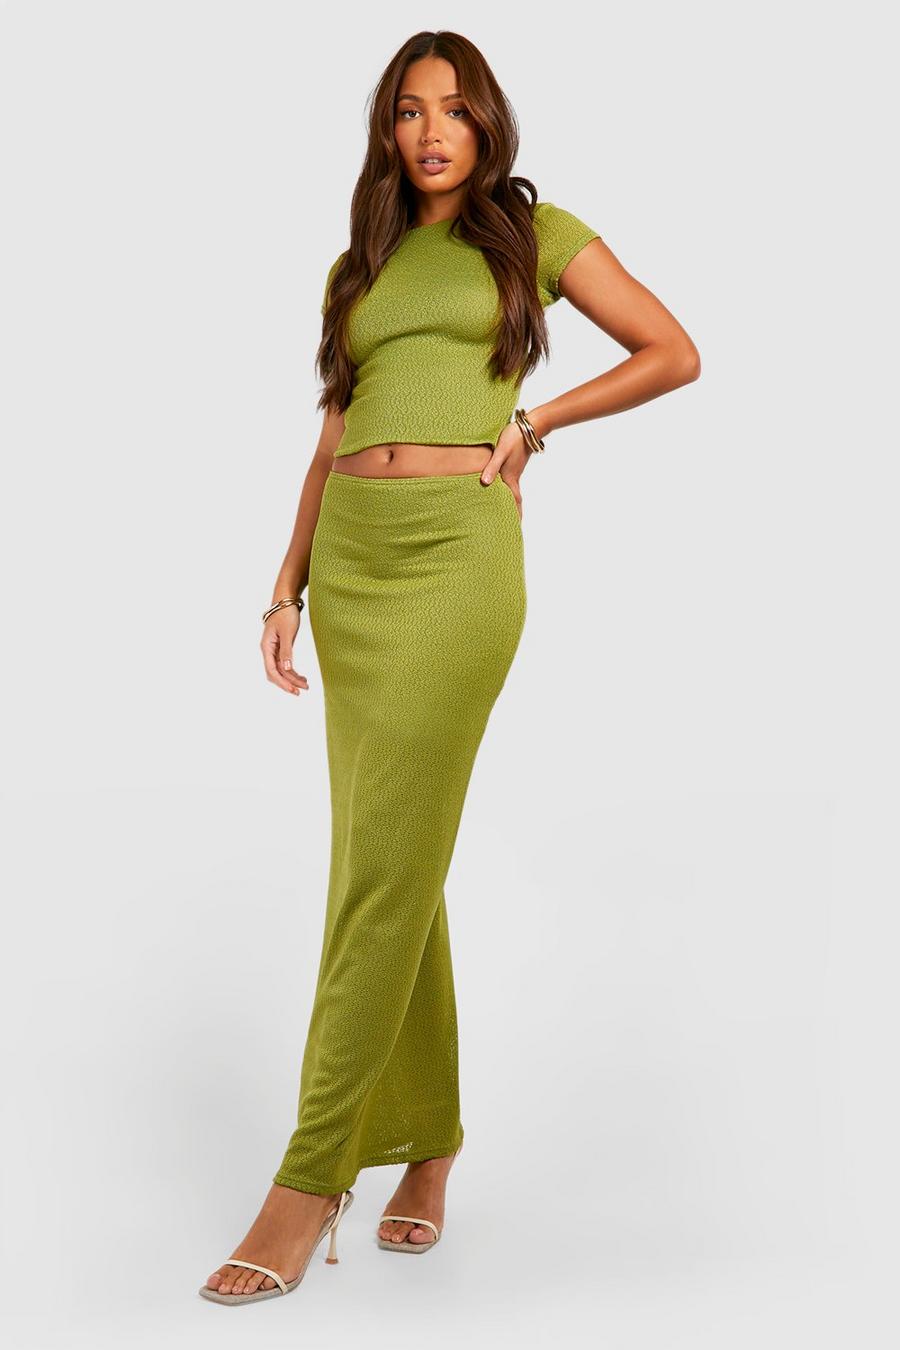 Olive green Tall Lightweight Knit Mid Rise Maxi Skirt